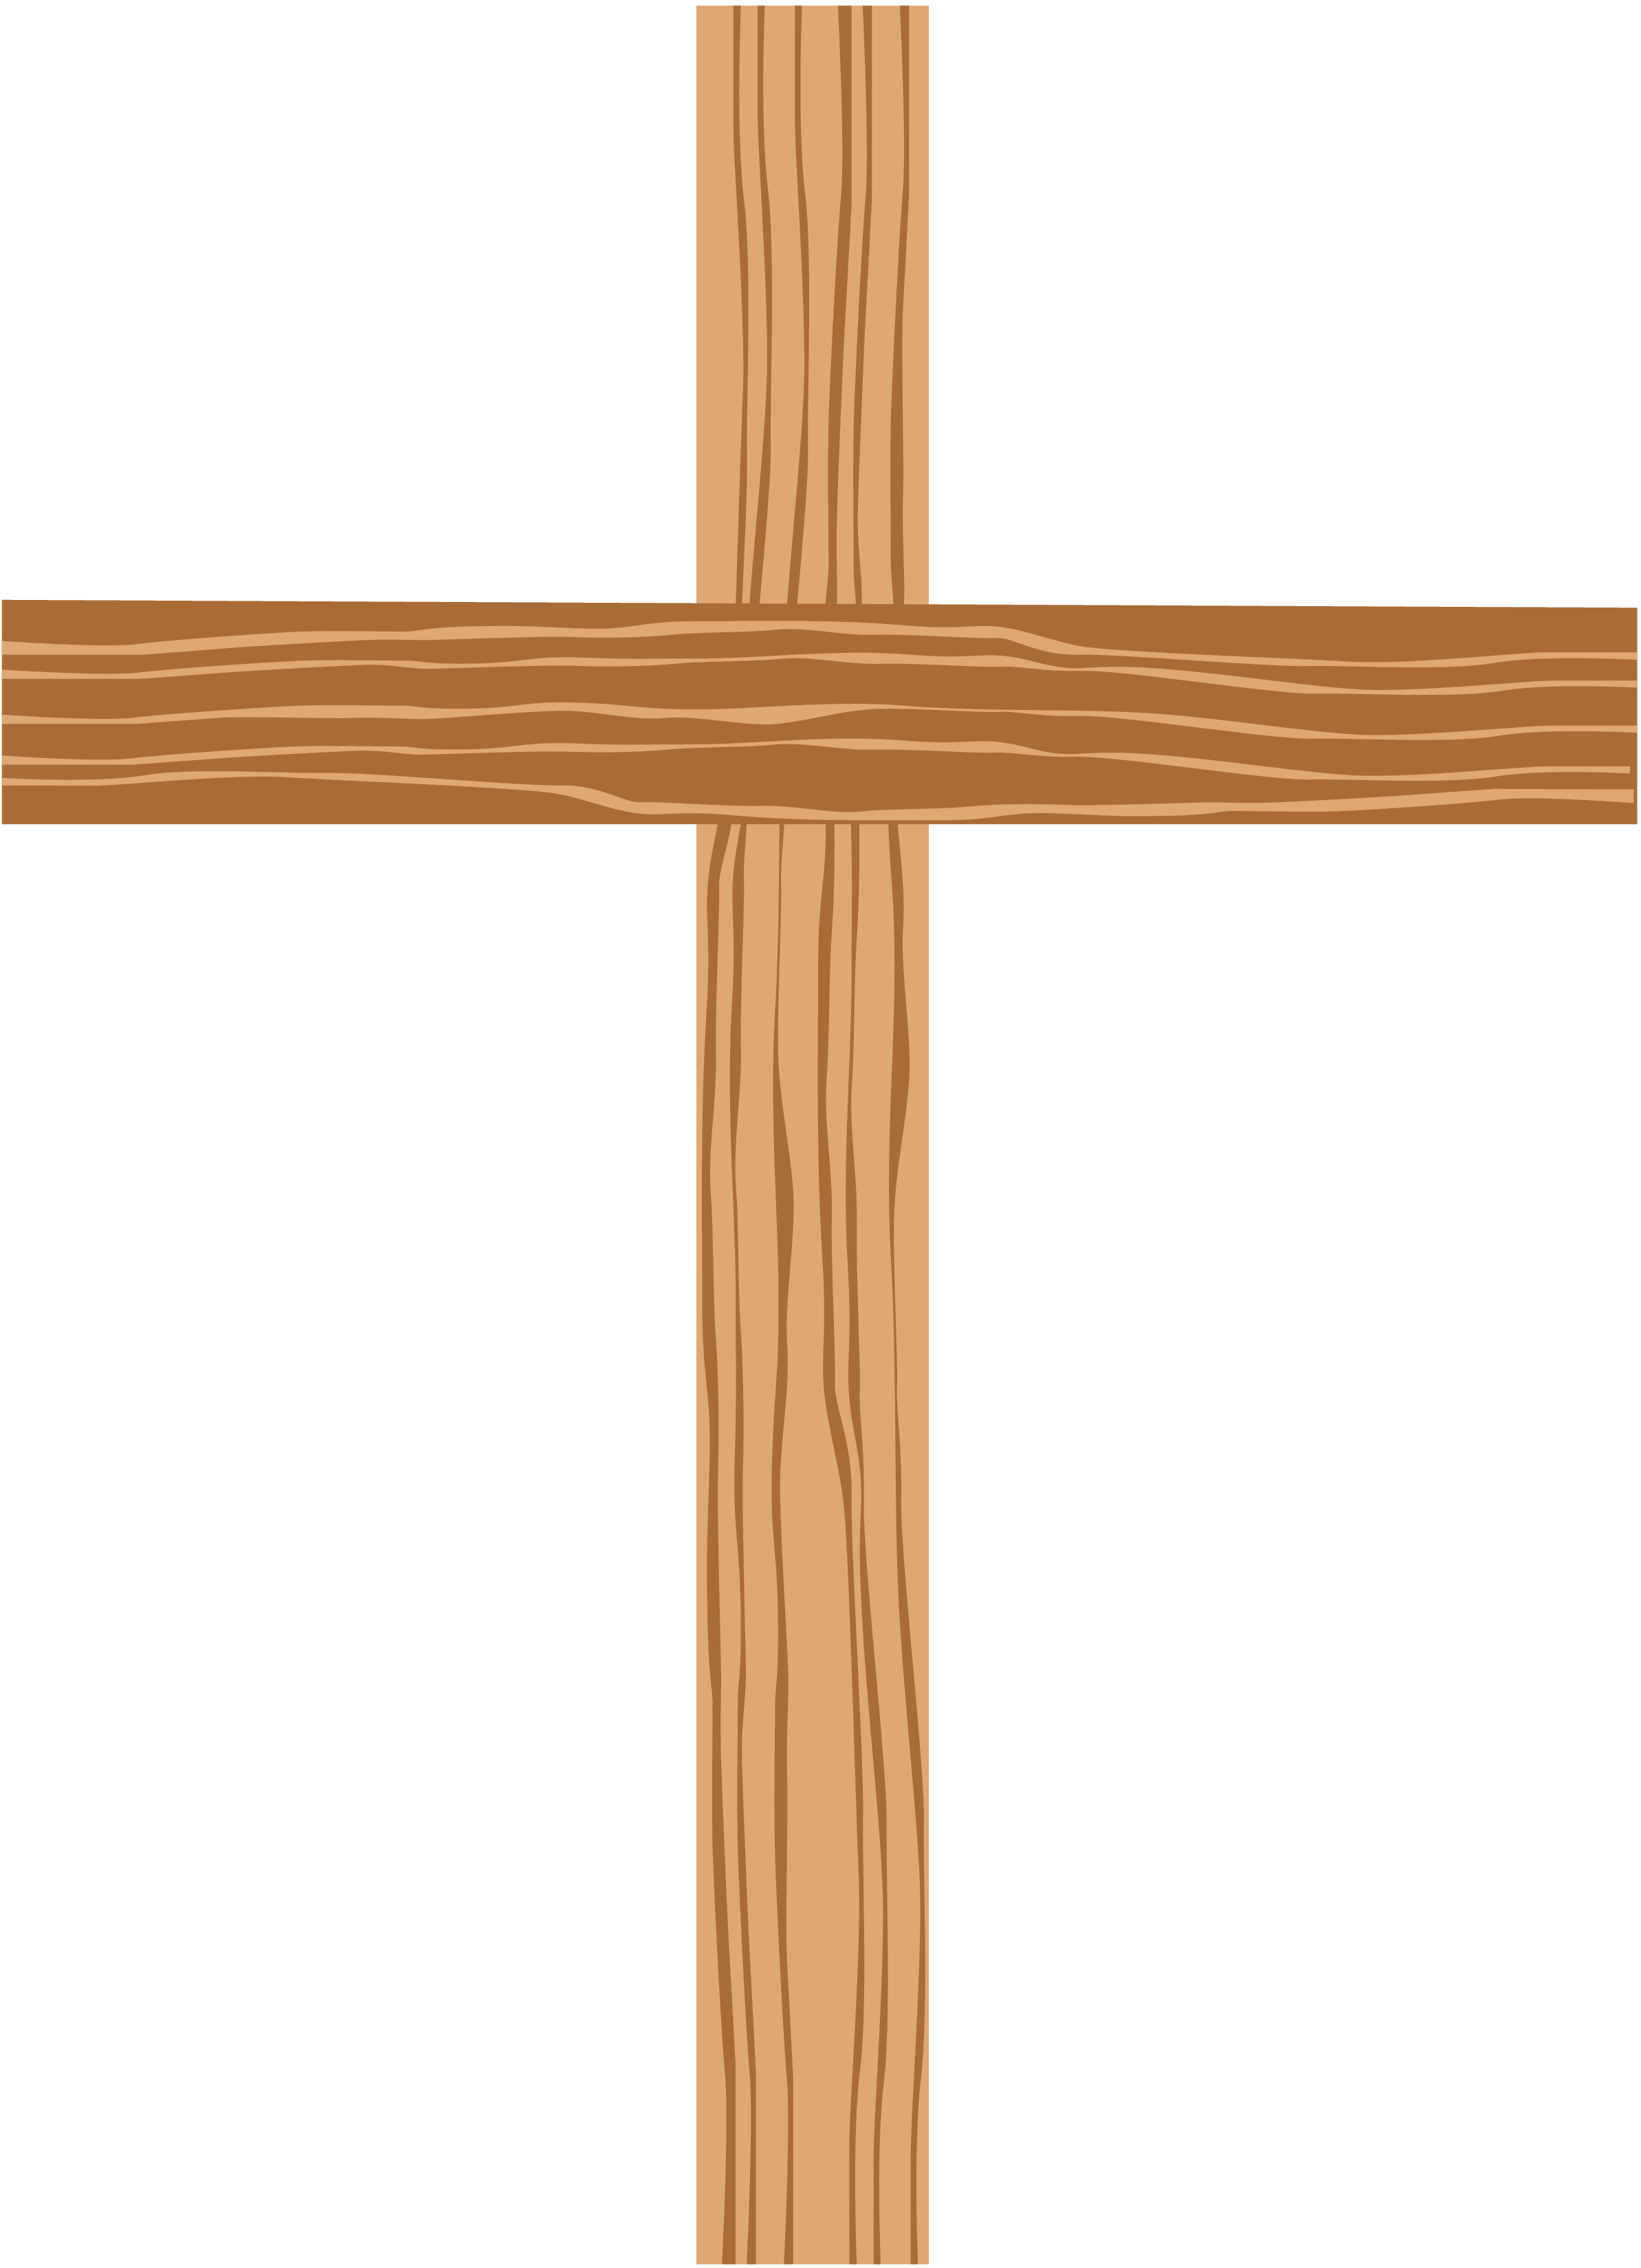 Christian Cross Hd PNG Image